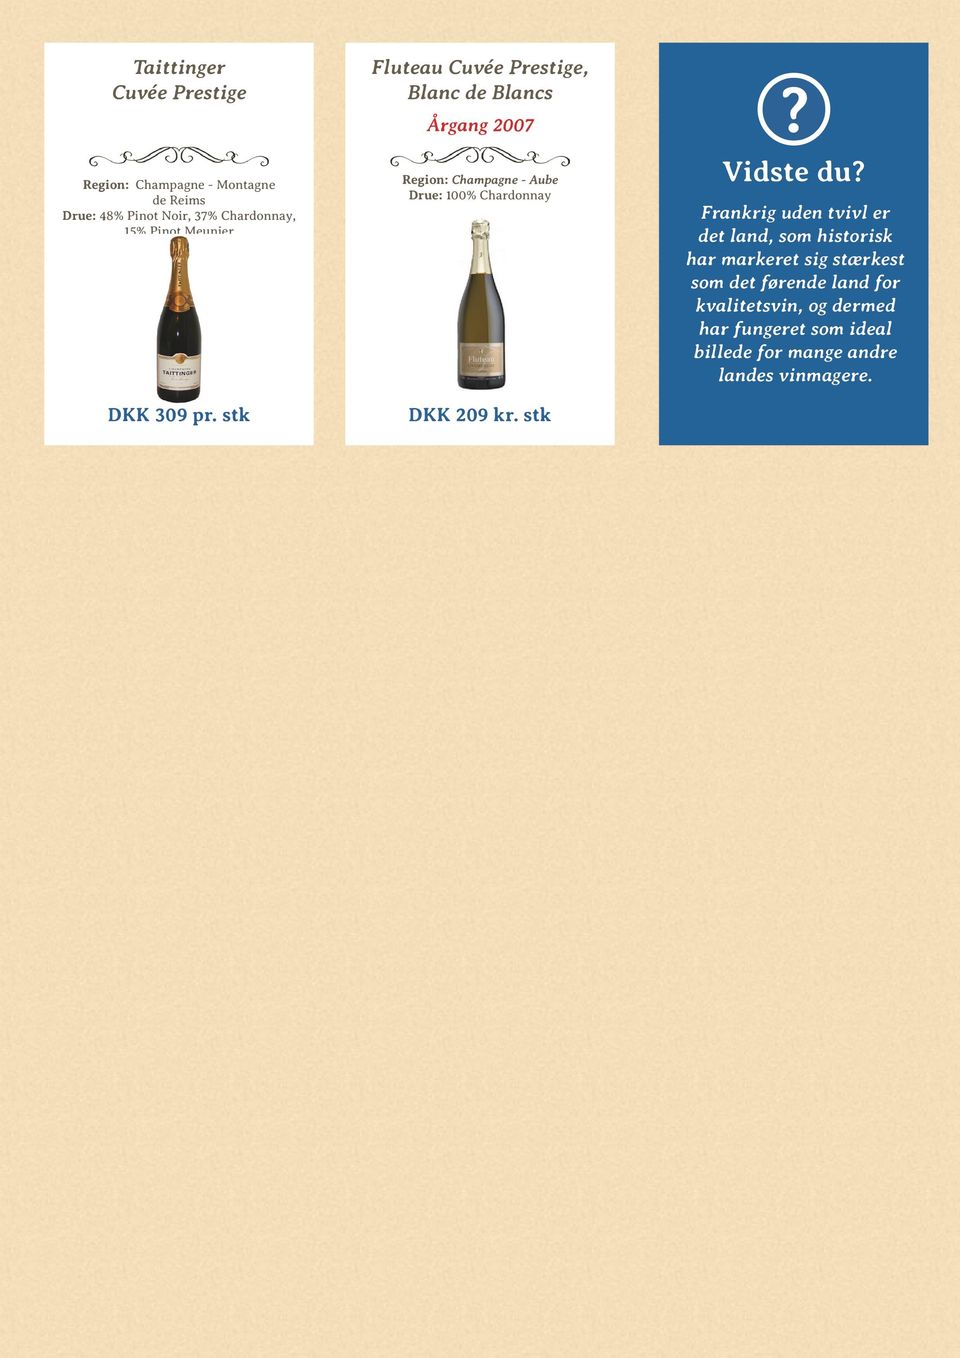 stk Fluteau Cuvée Prestige, Blanc de Blancs Årgang 2007 Region: Champagne - Aube Drue: 100% Chardonnay DKK 209